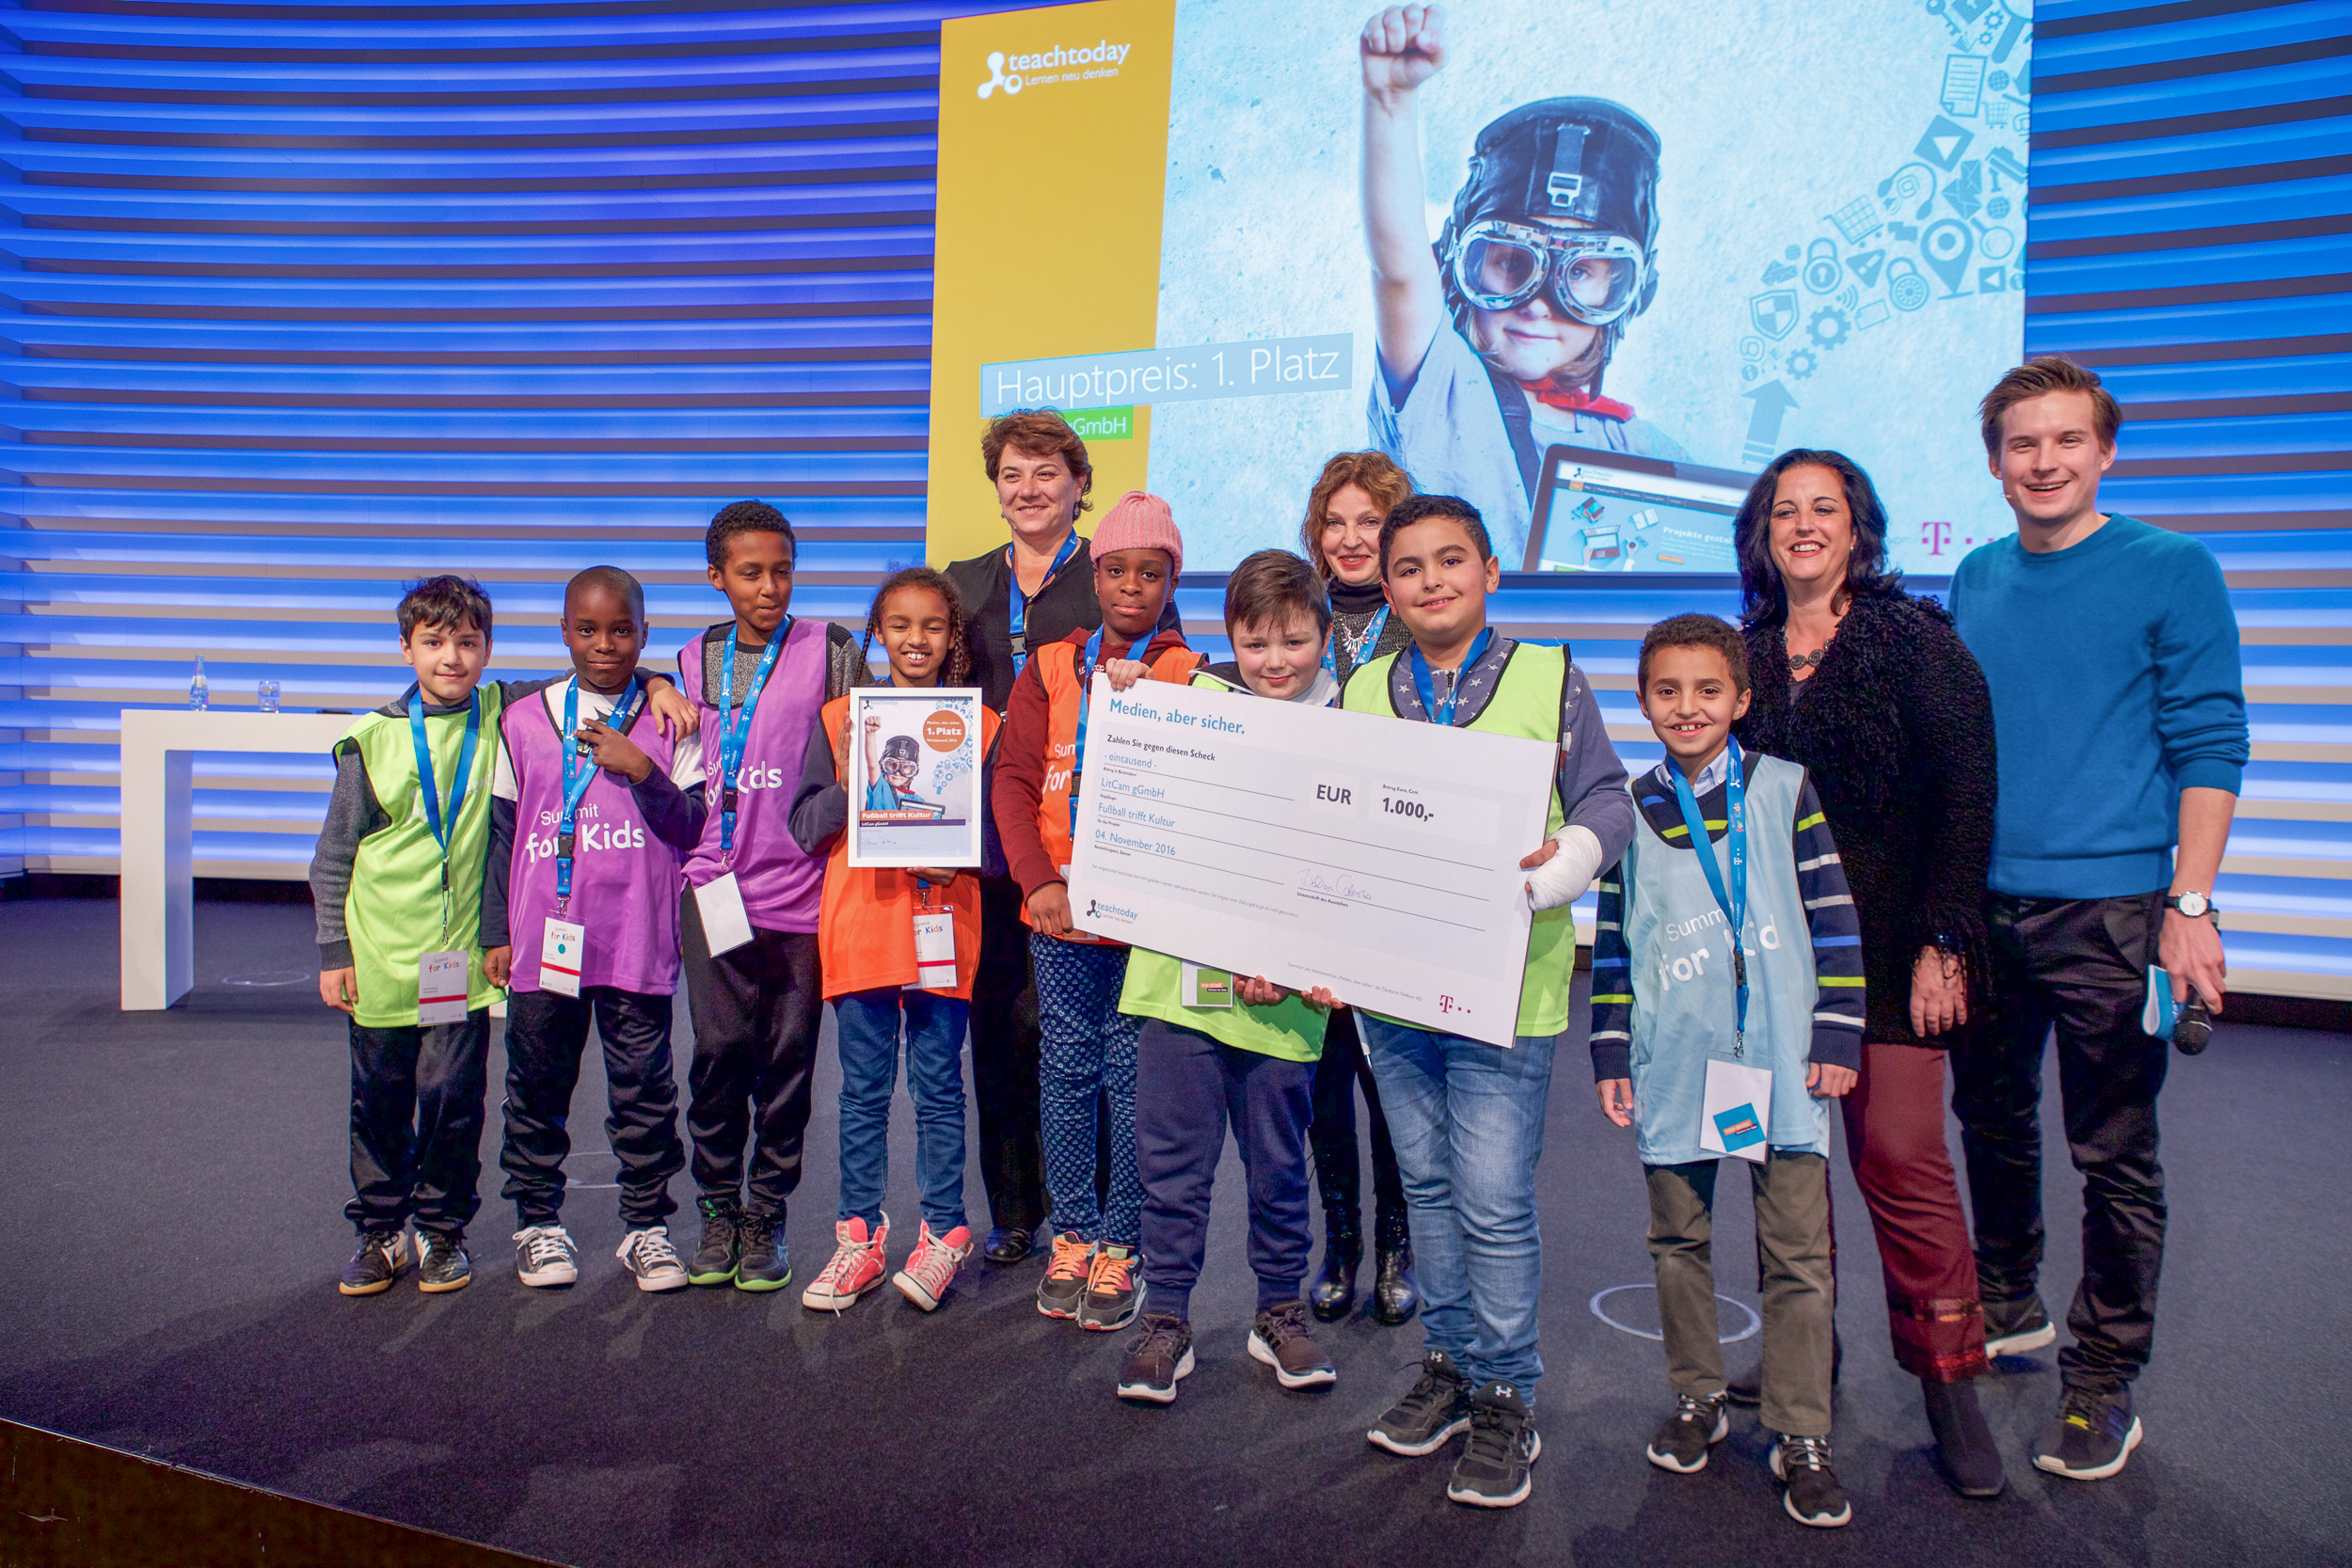 Preisträger 2016 - 1. Platz: LitCam gGmbH mit dem Projekt "Fußball trifft Kultur"